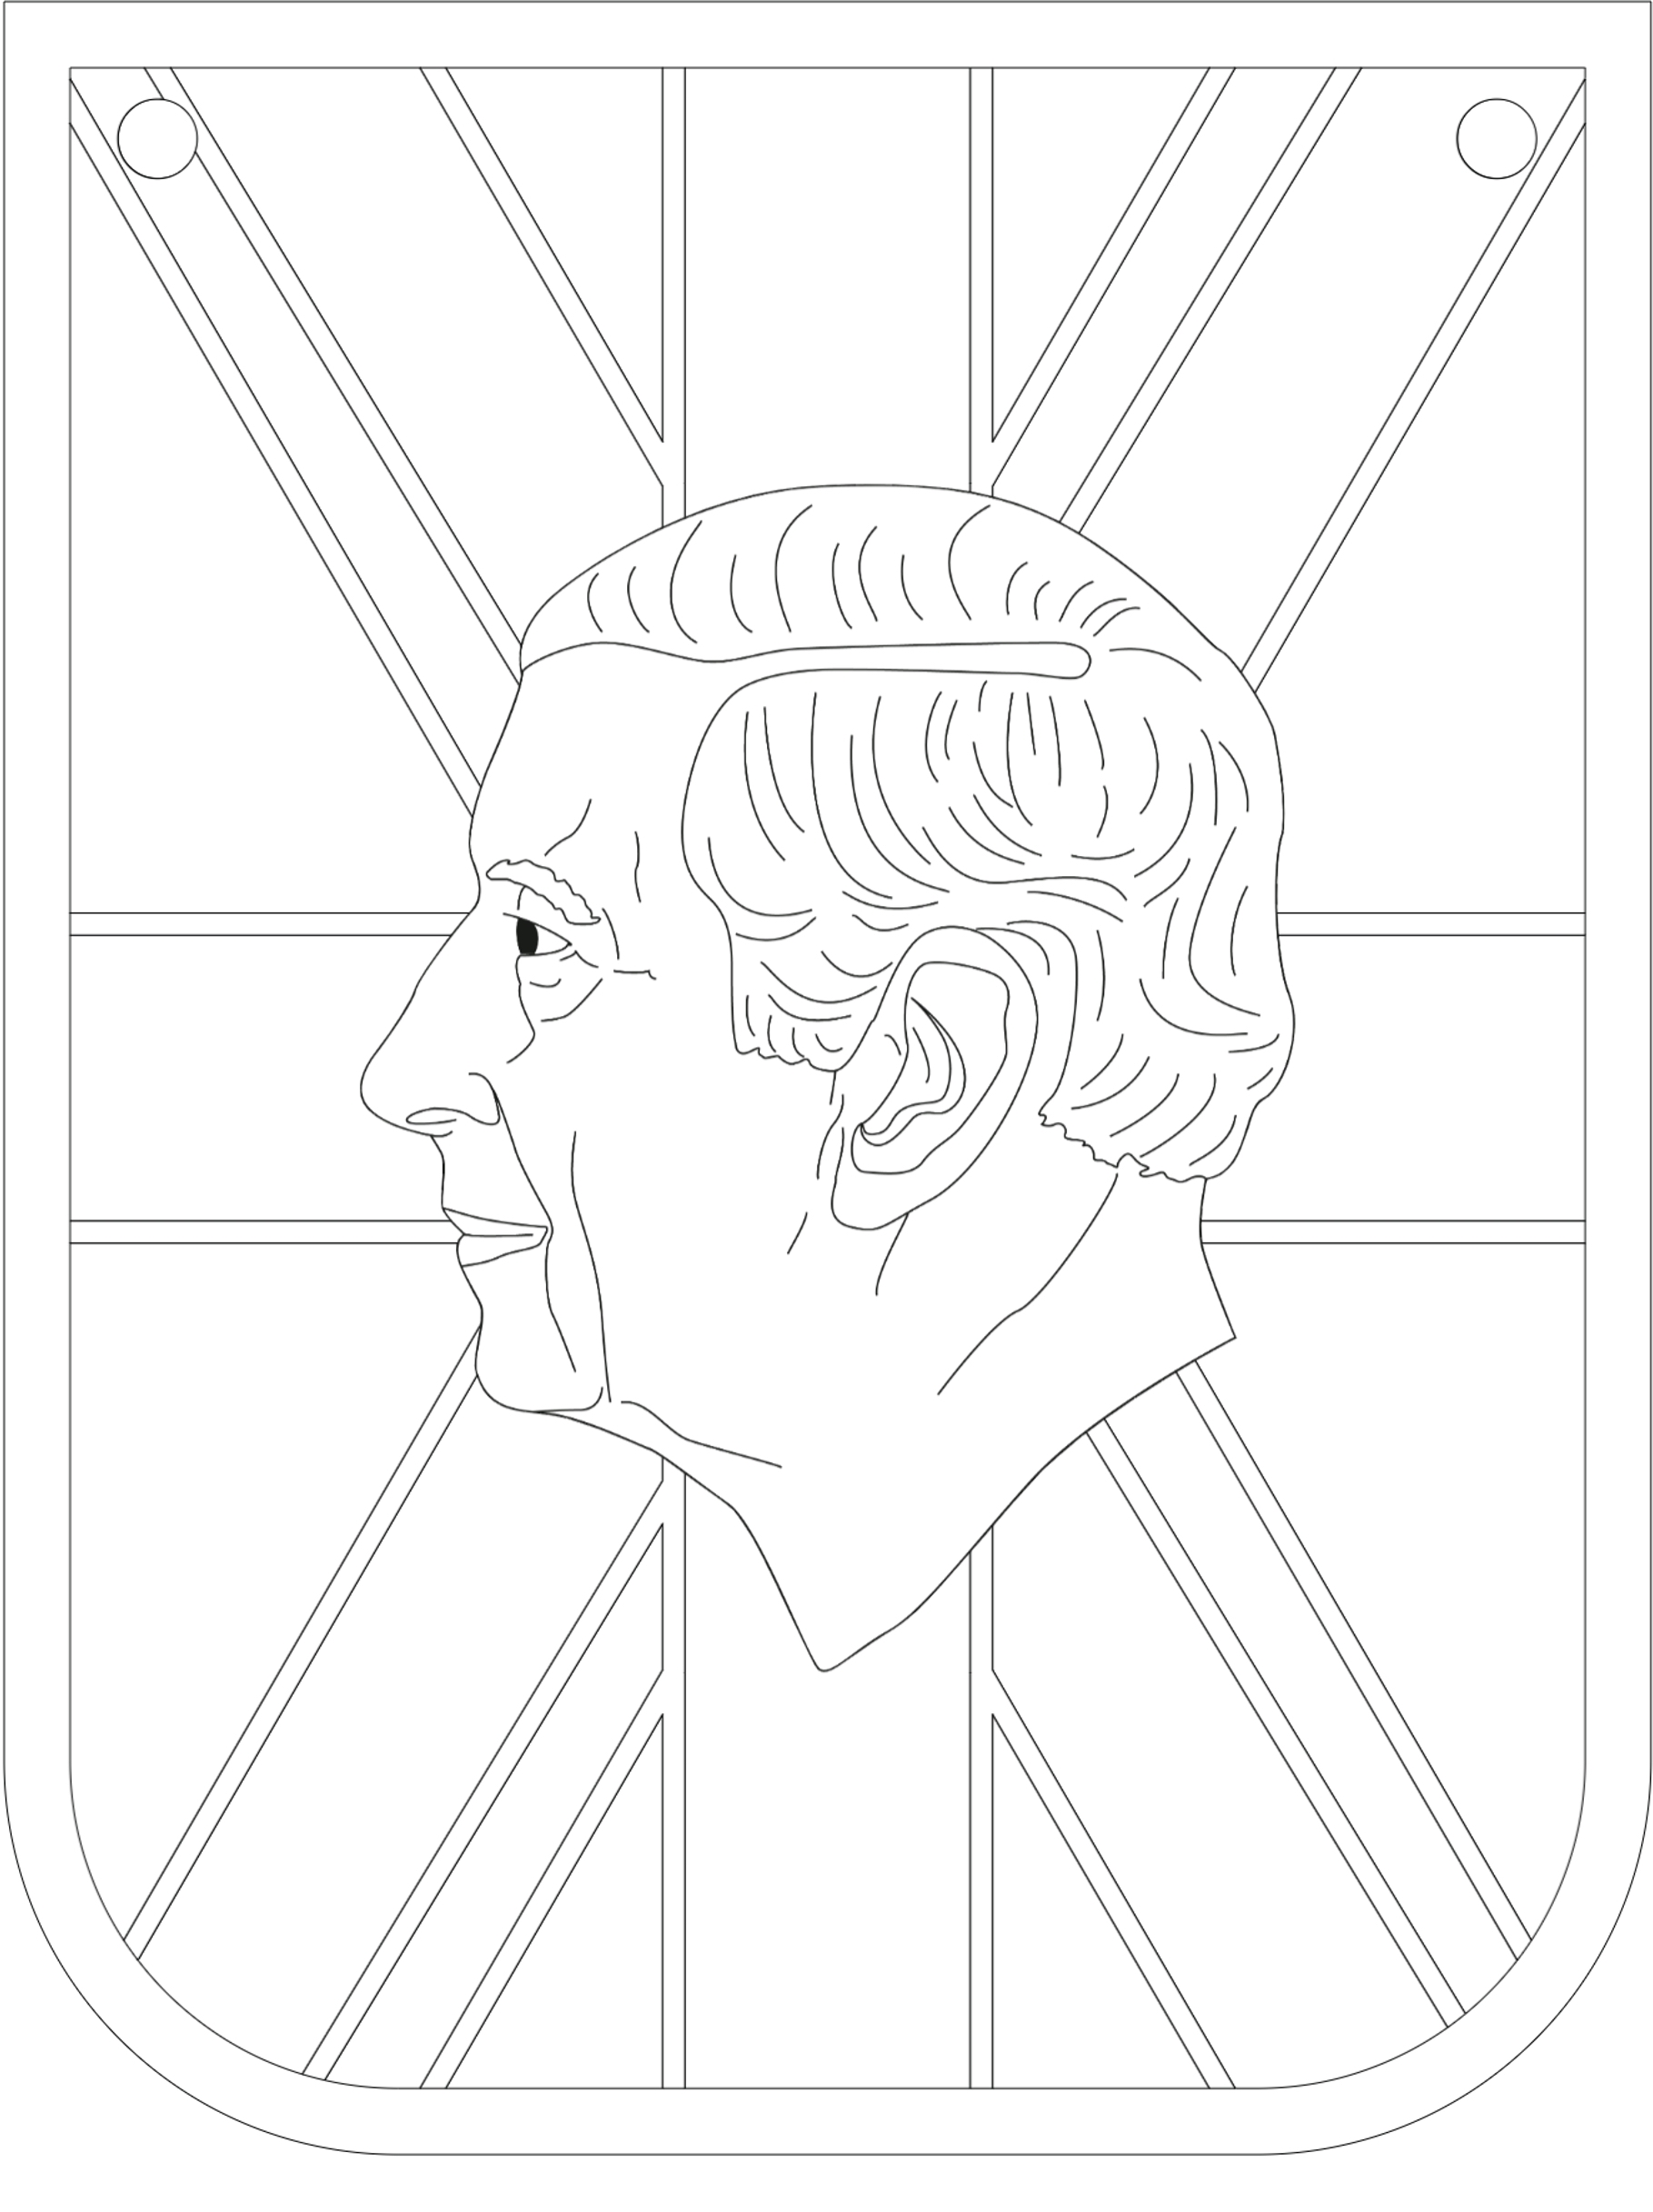 King Charles III coronation coloring page